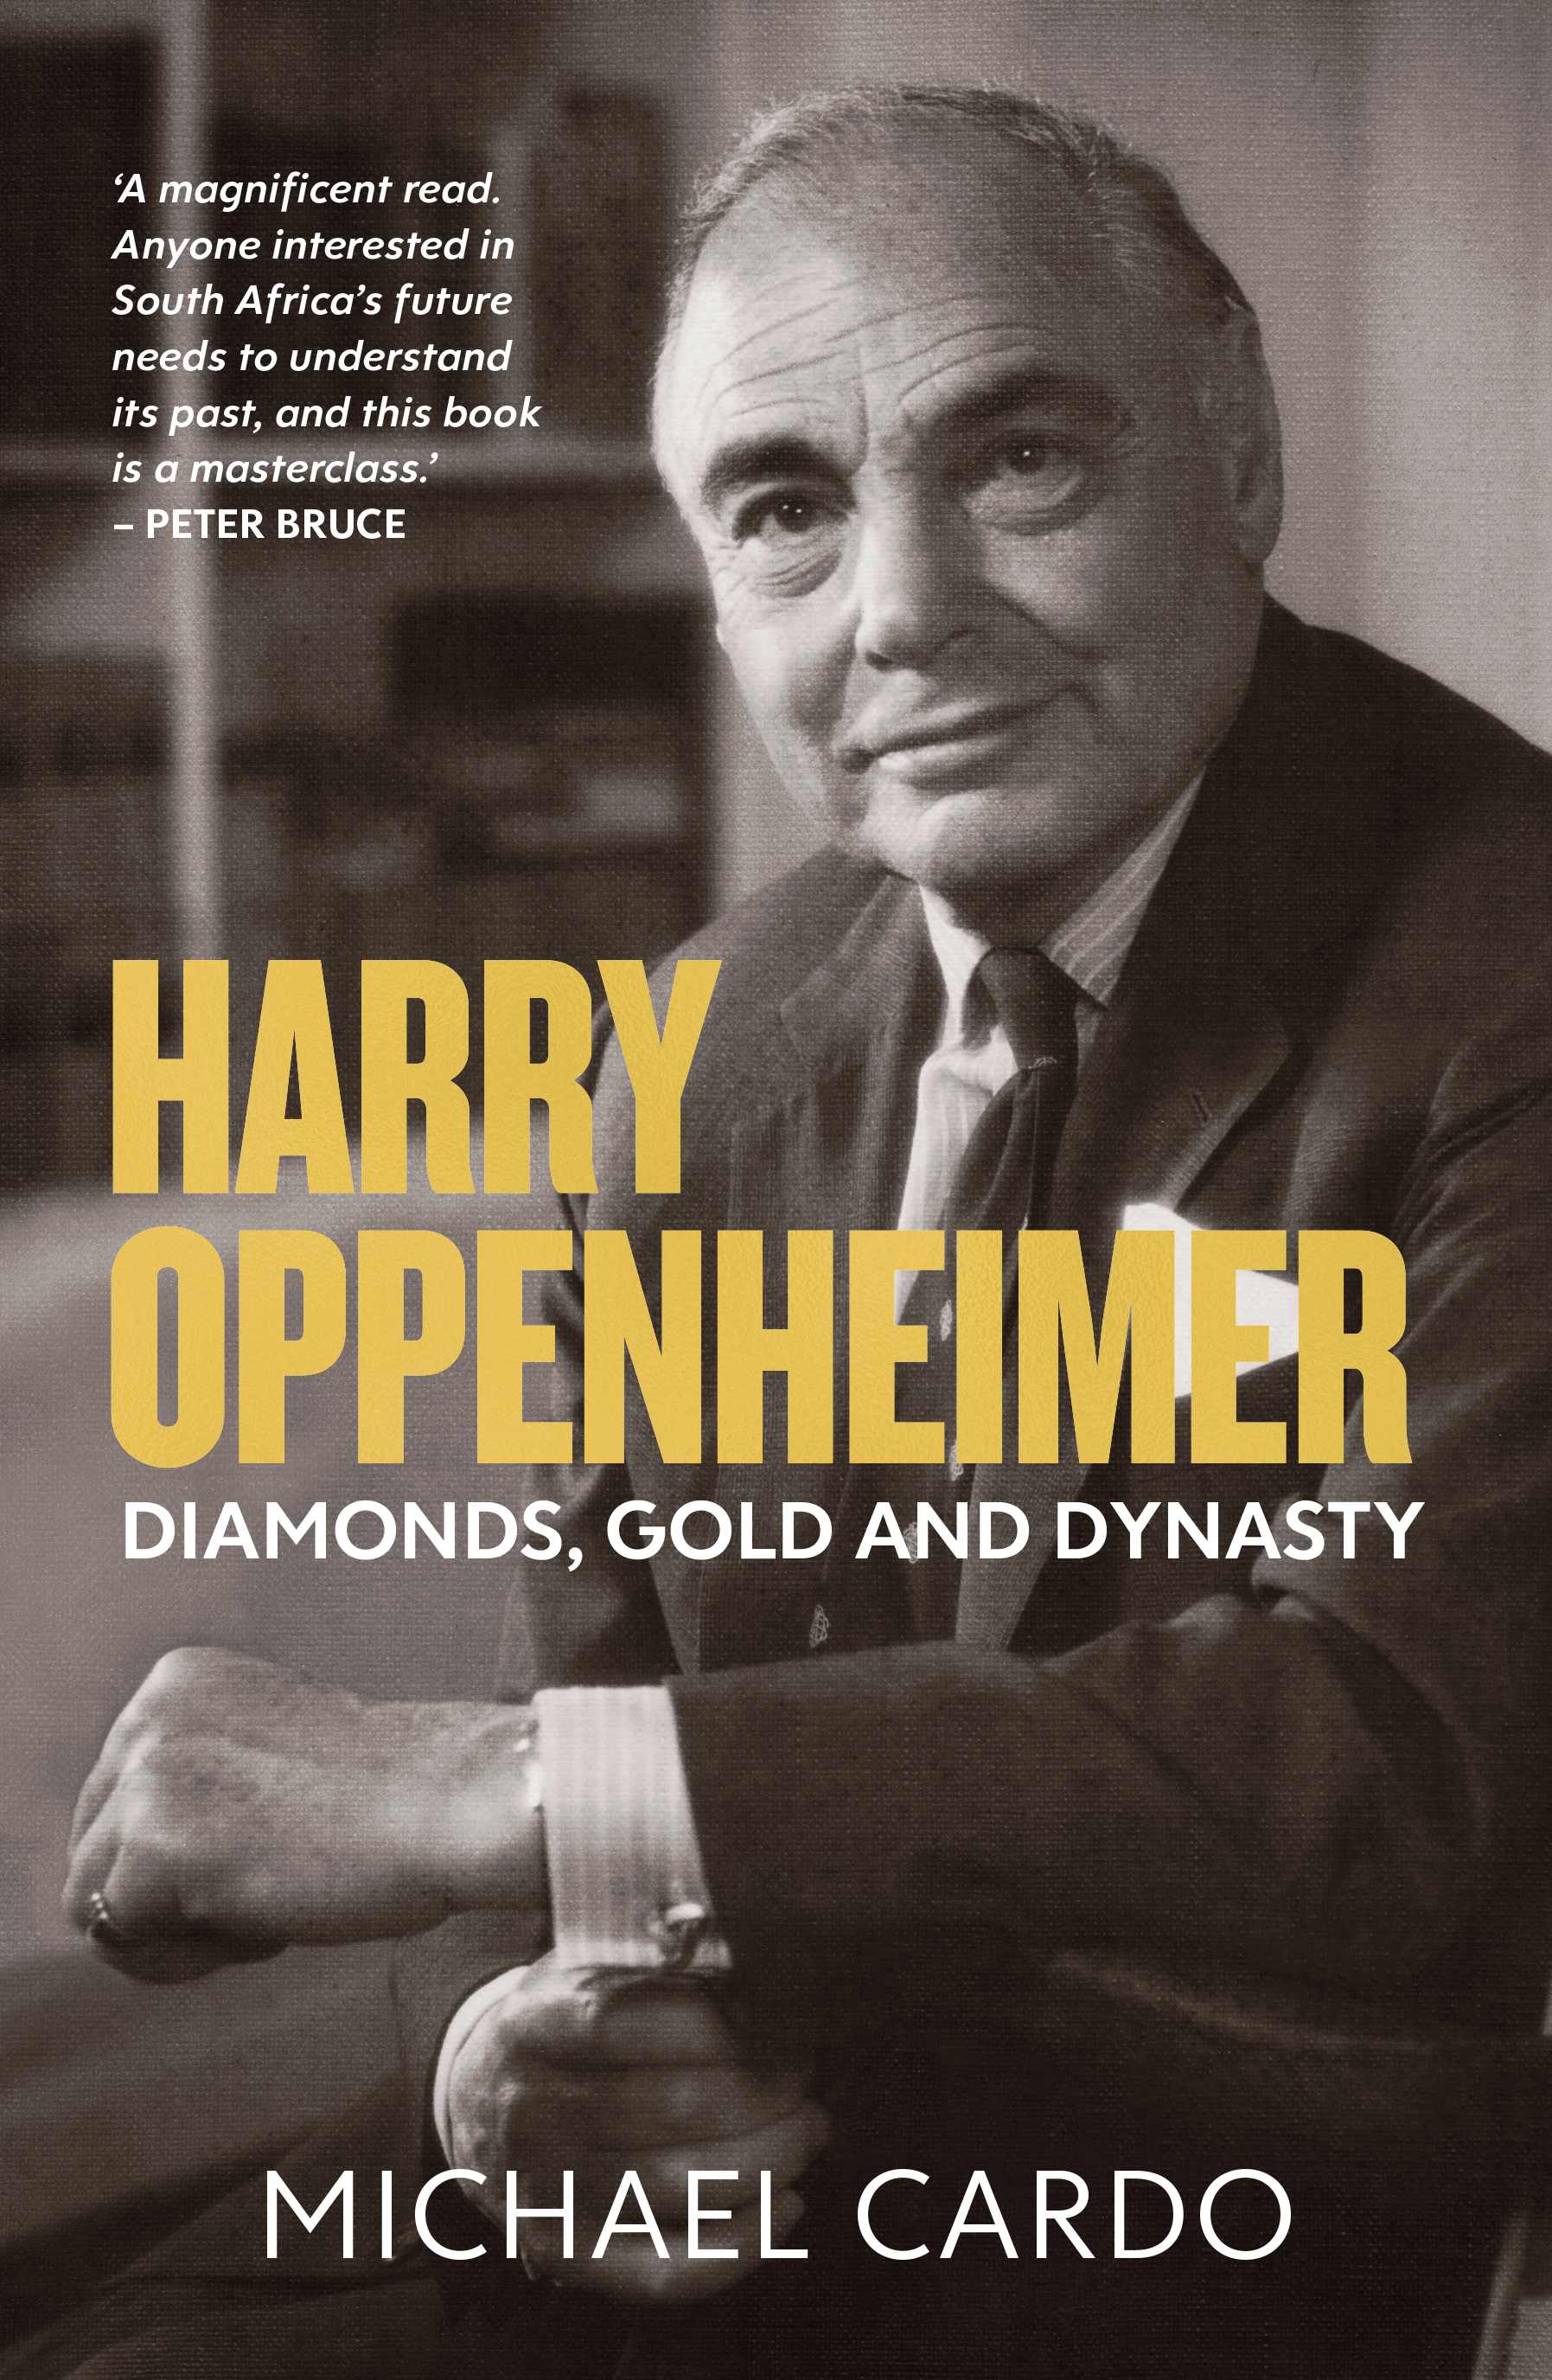  Harry Oppenheimer : Diamonds, Gold and Dynasty